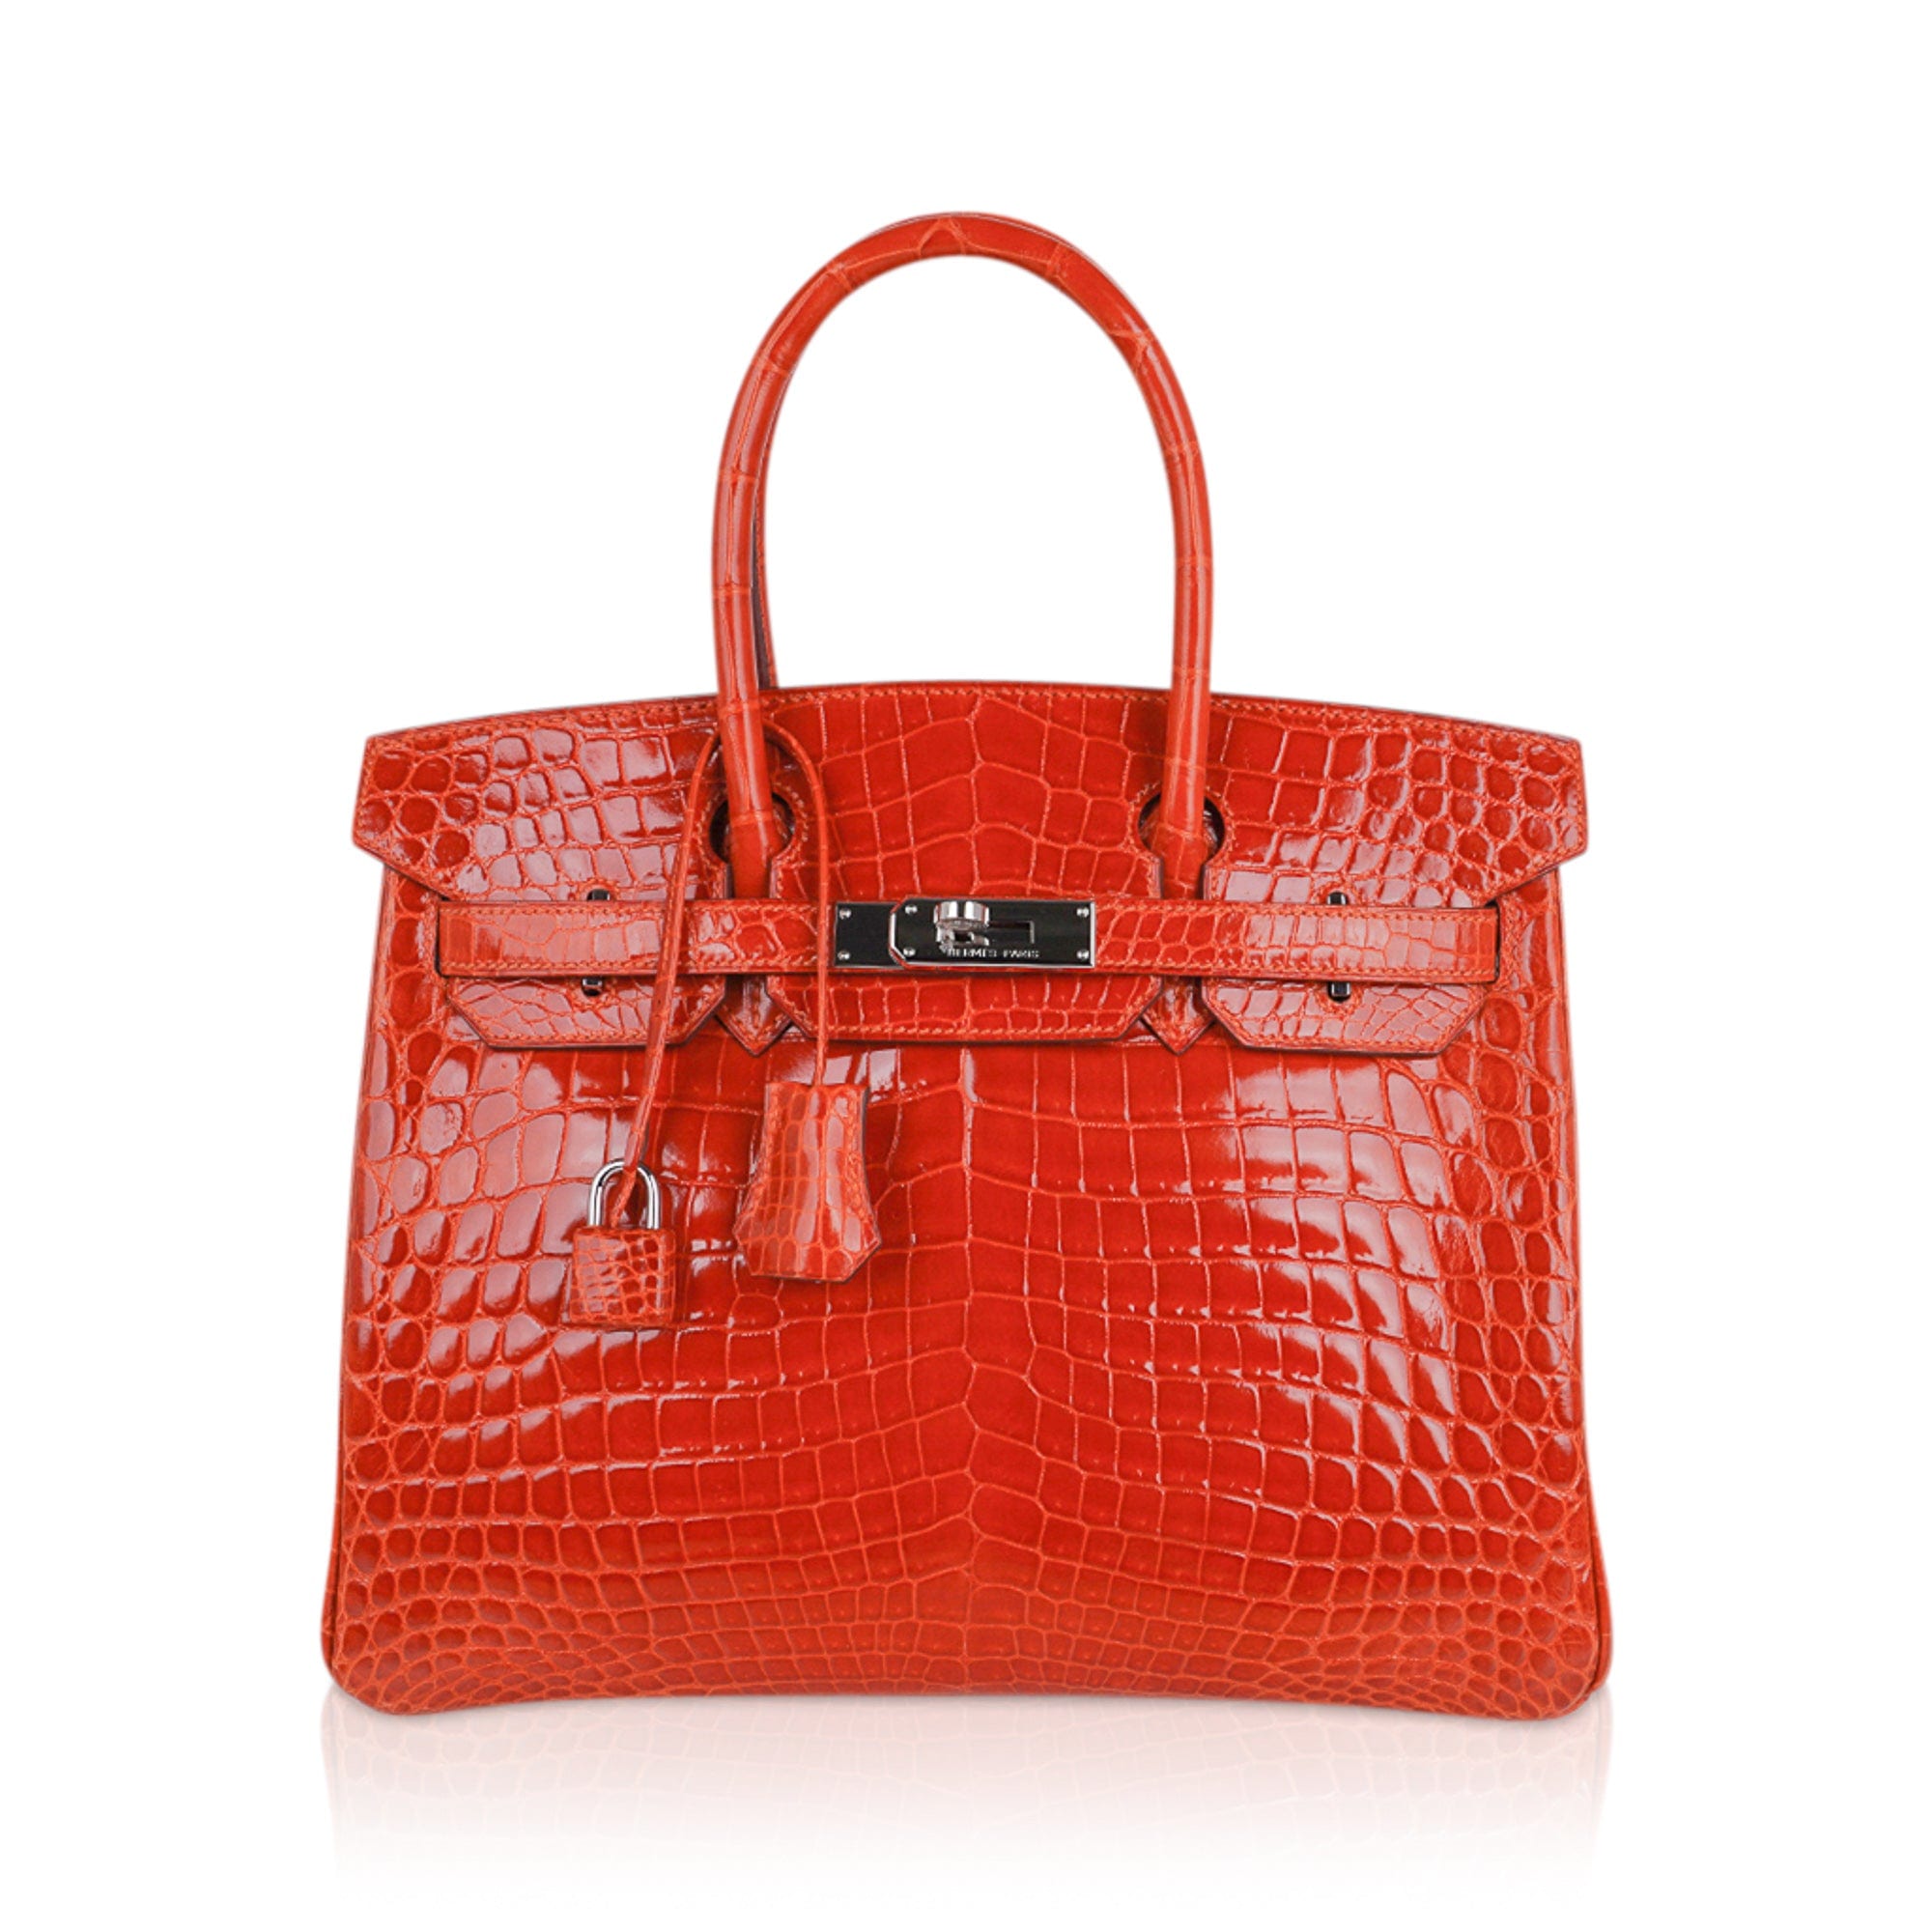 hermès crocodile bag price